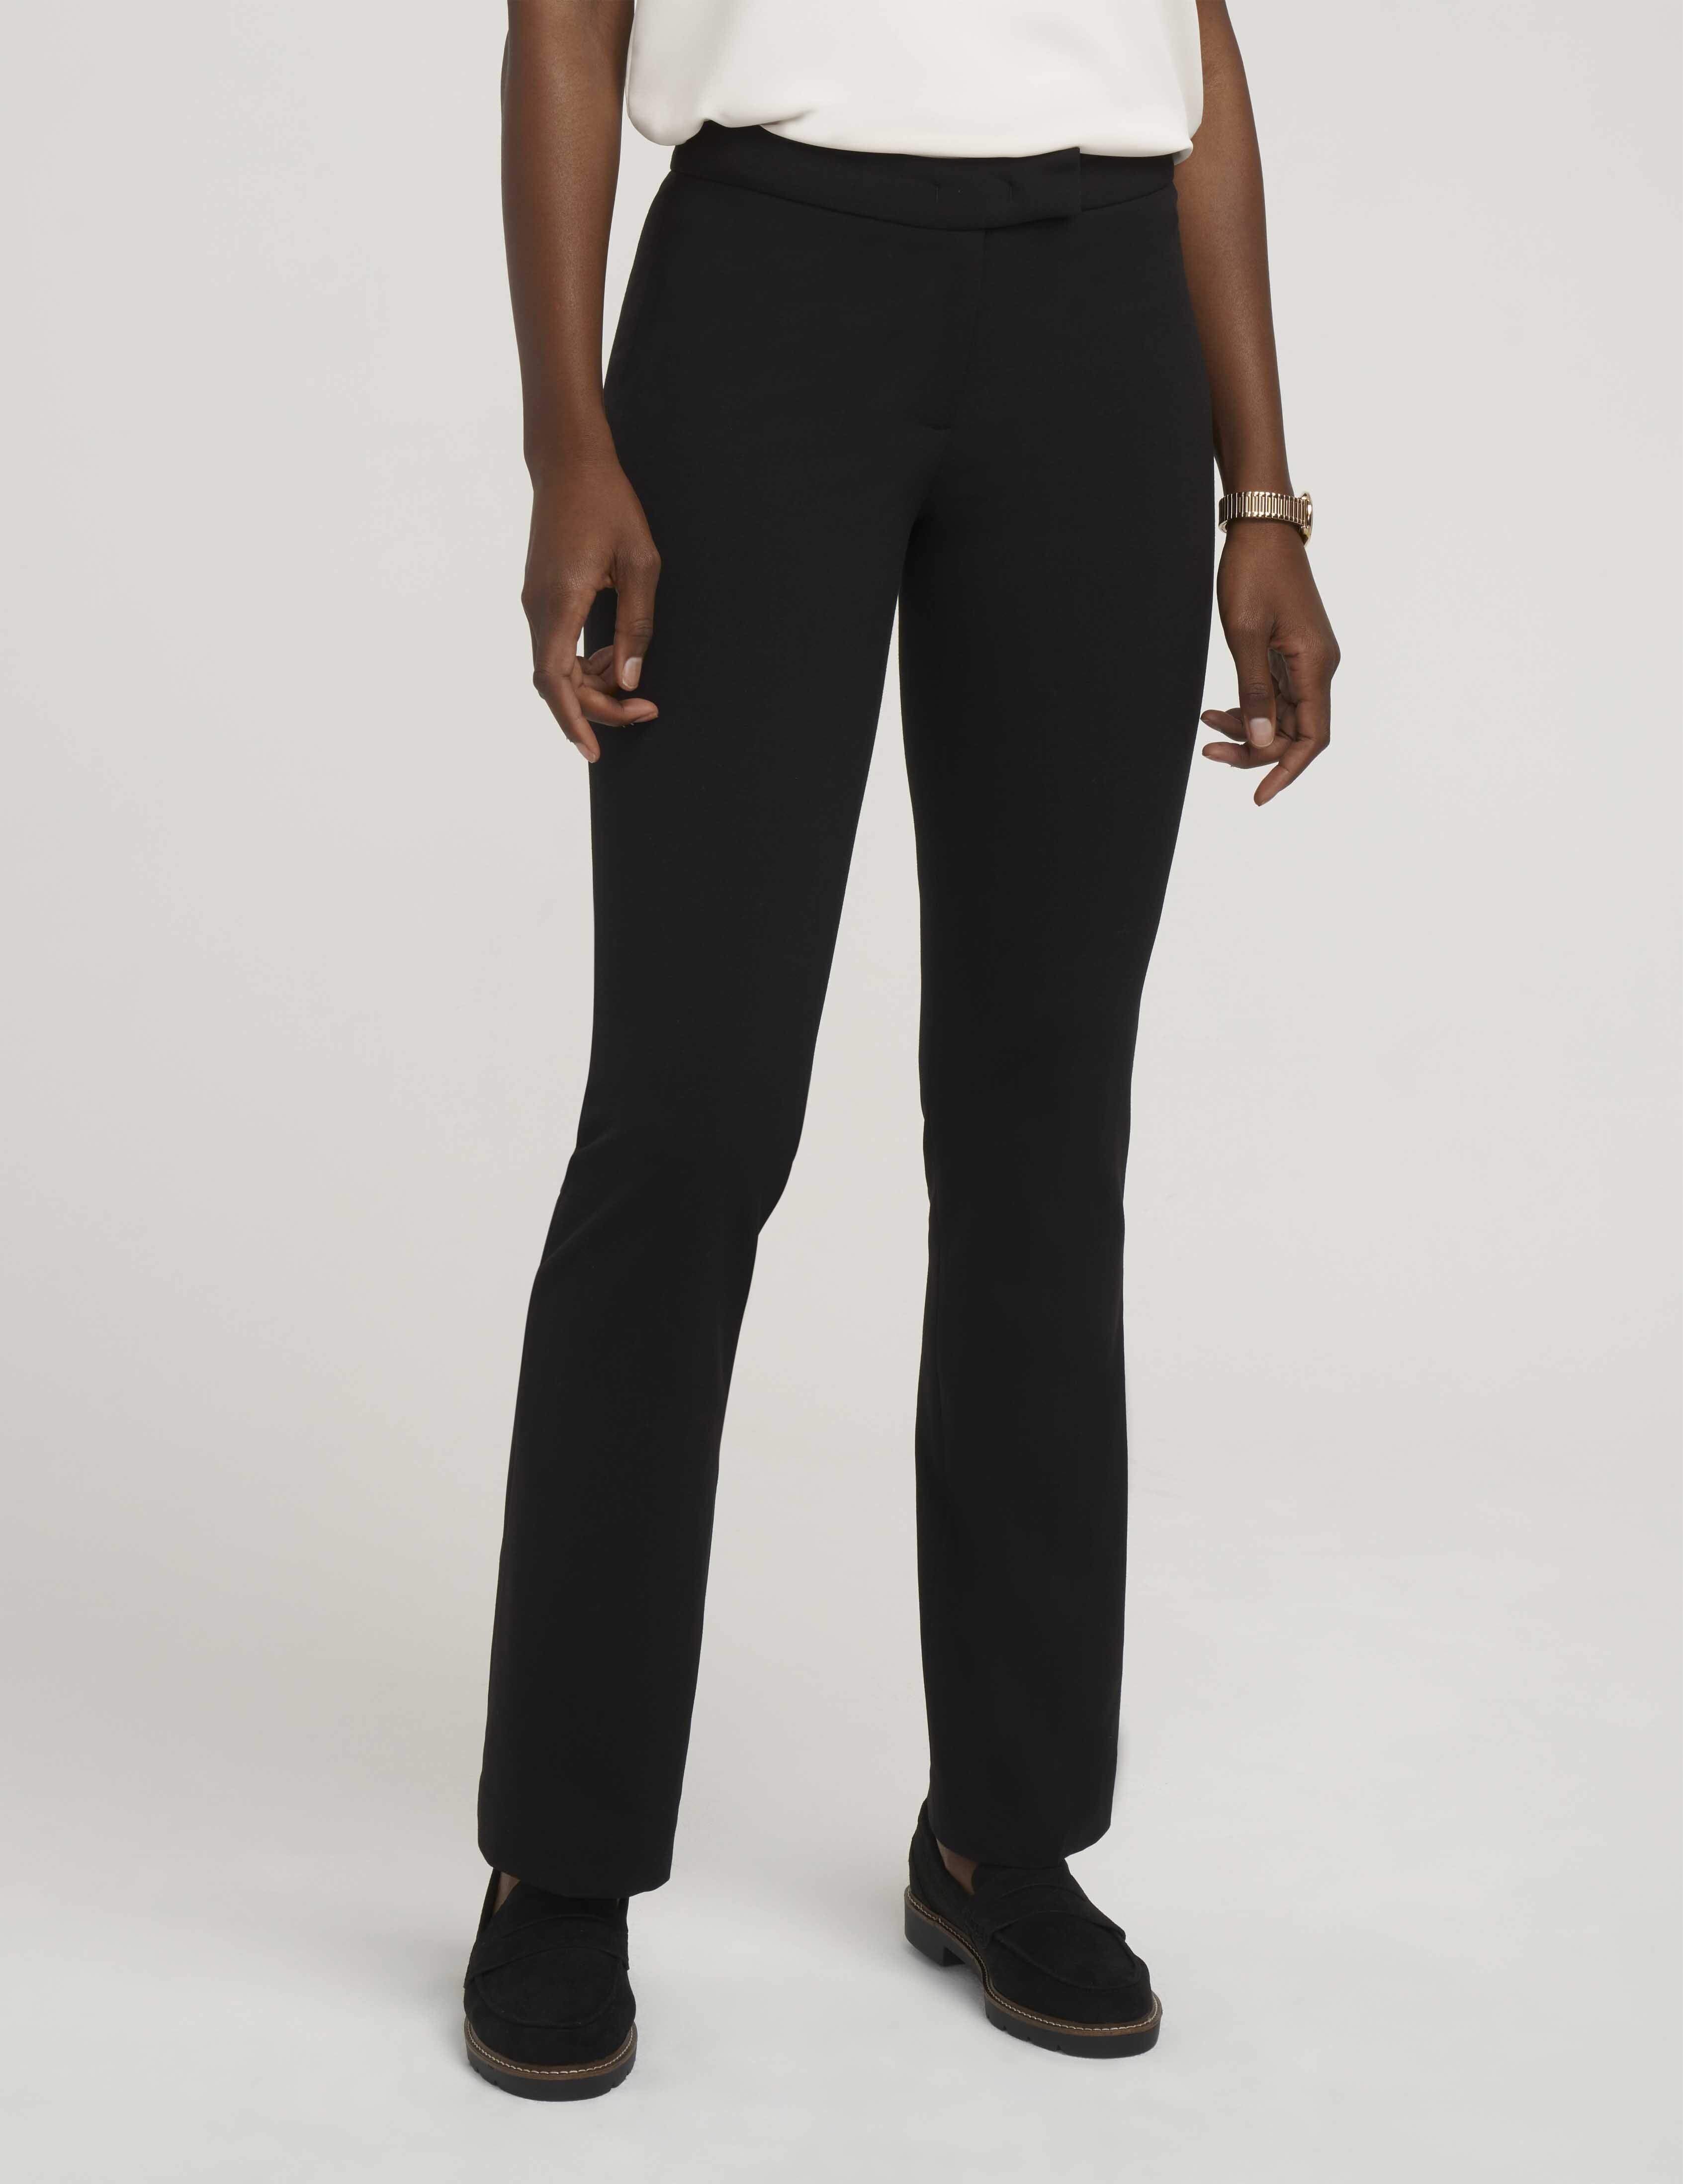 Buy Black Straight-Fit Pants Online - Label Ritu Kumar India Store View